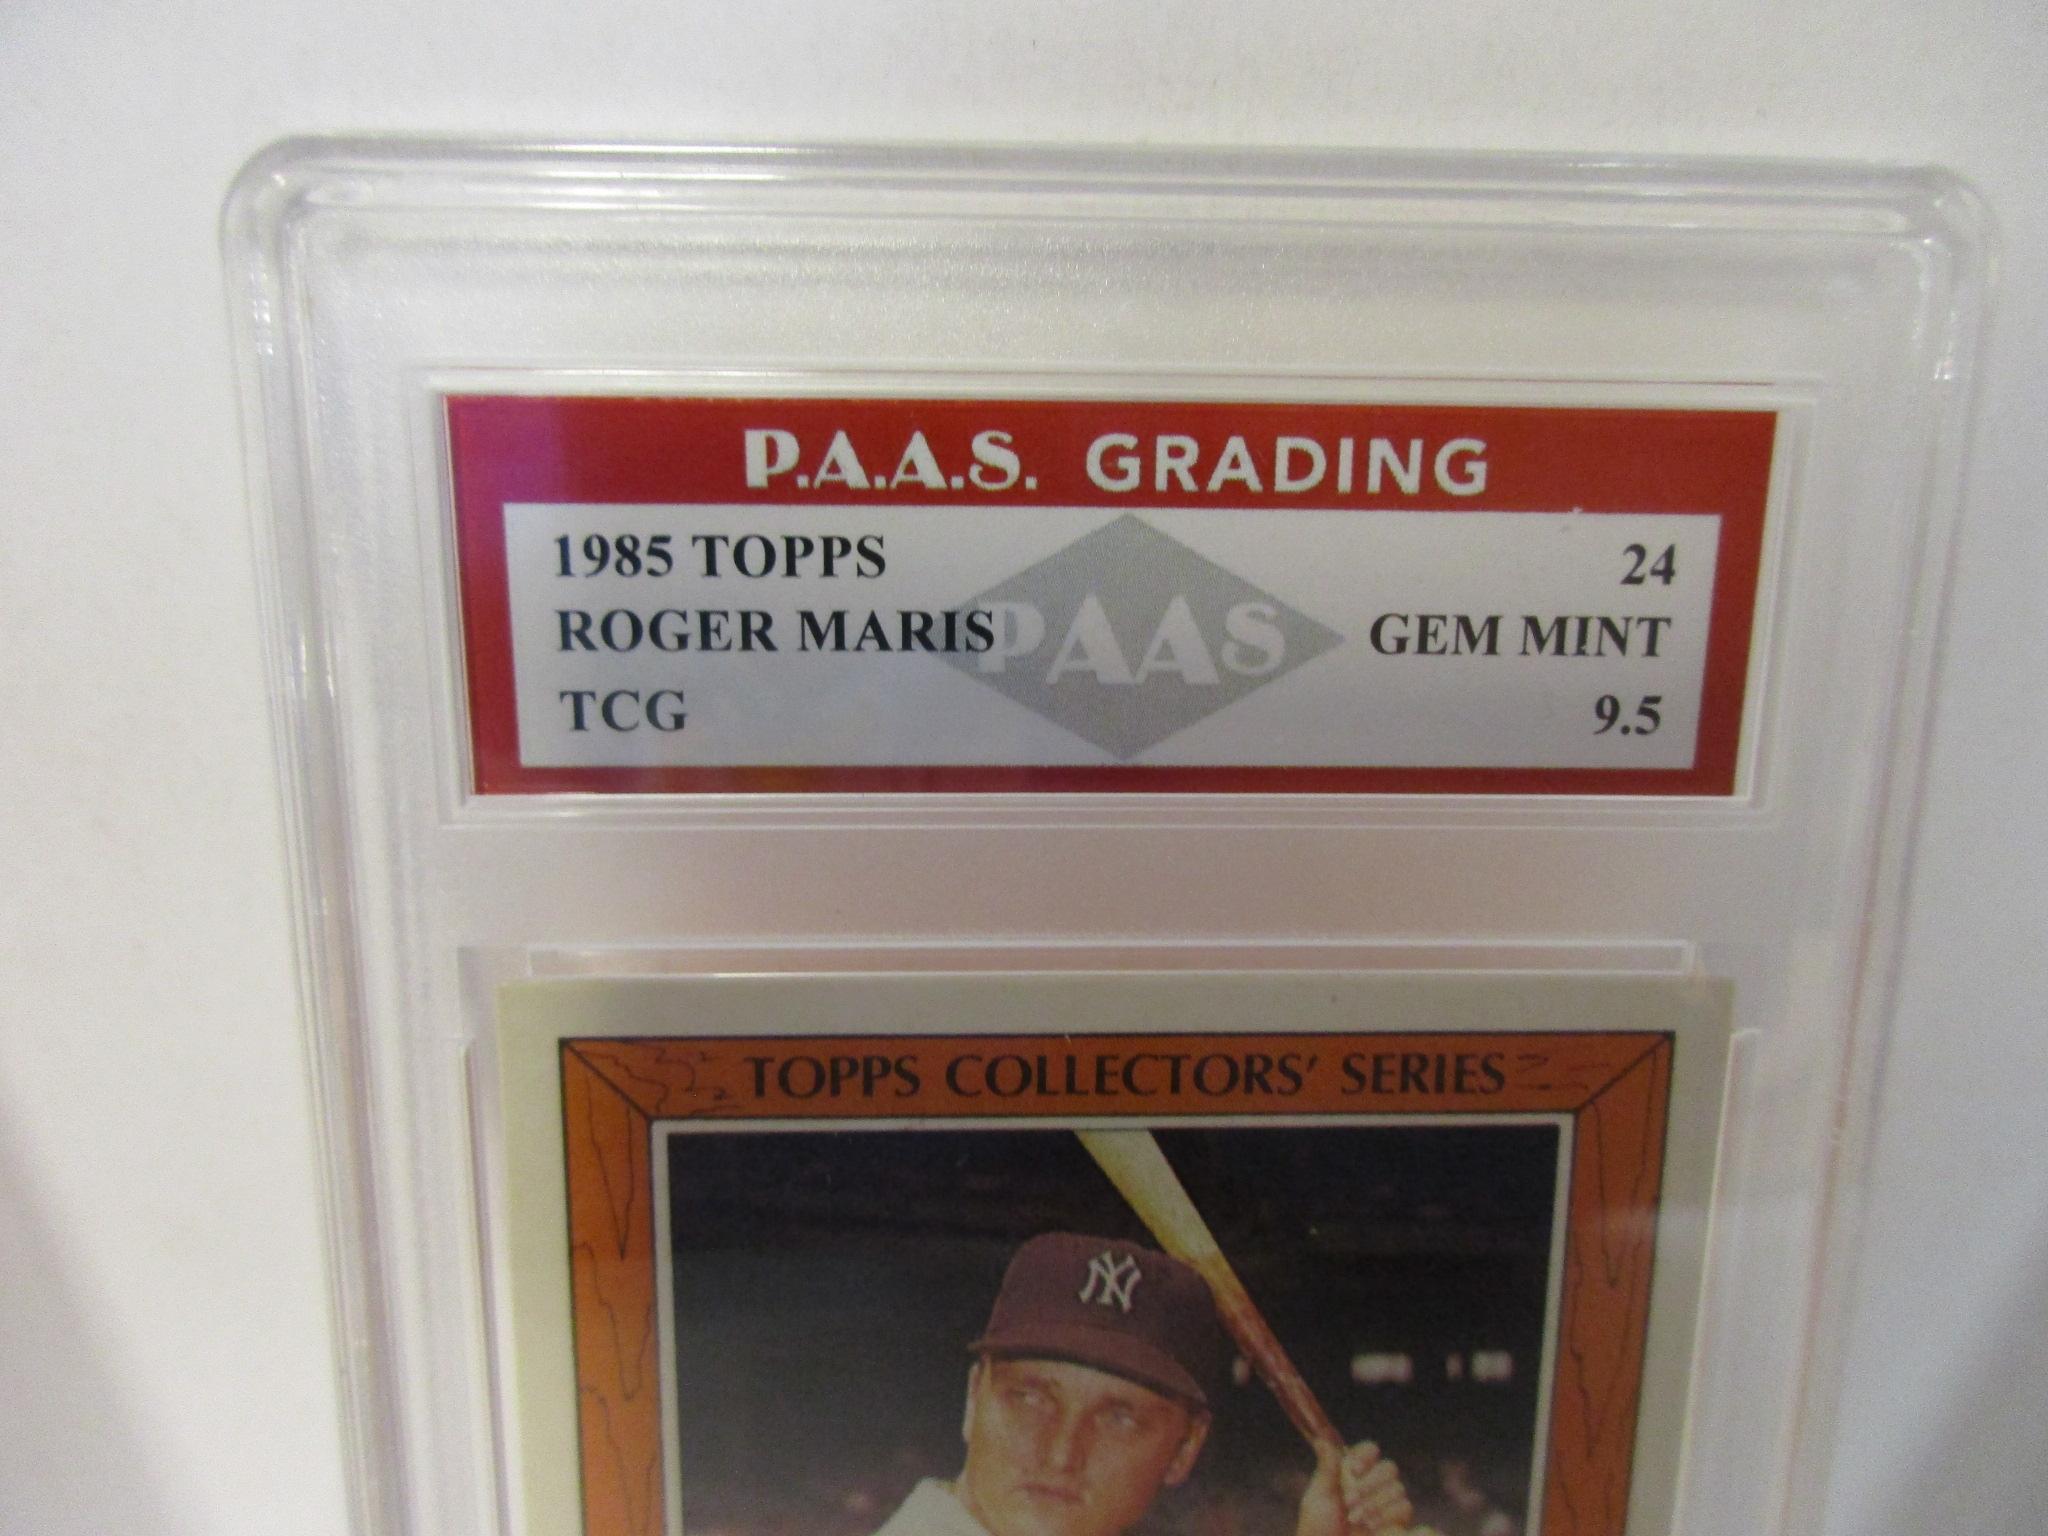 Roger Maris Yankees 1985 Topps TCG #24 graded PAAS Gem Mint 9.5